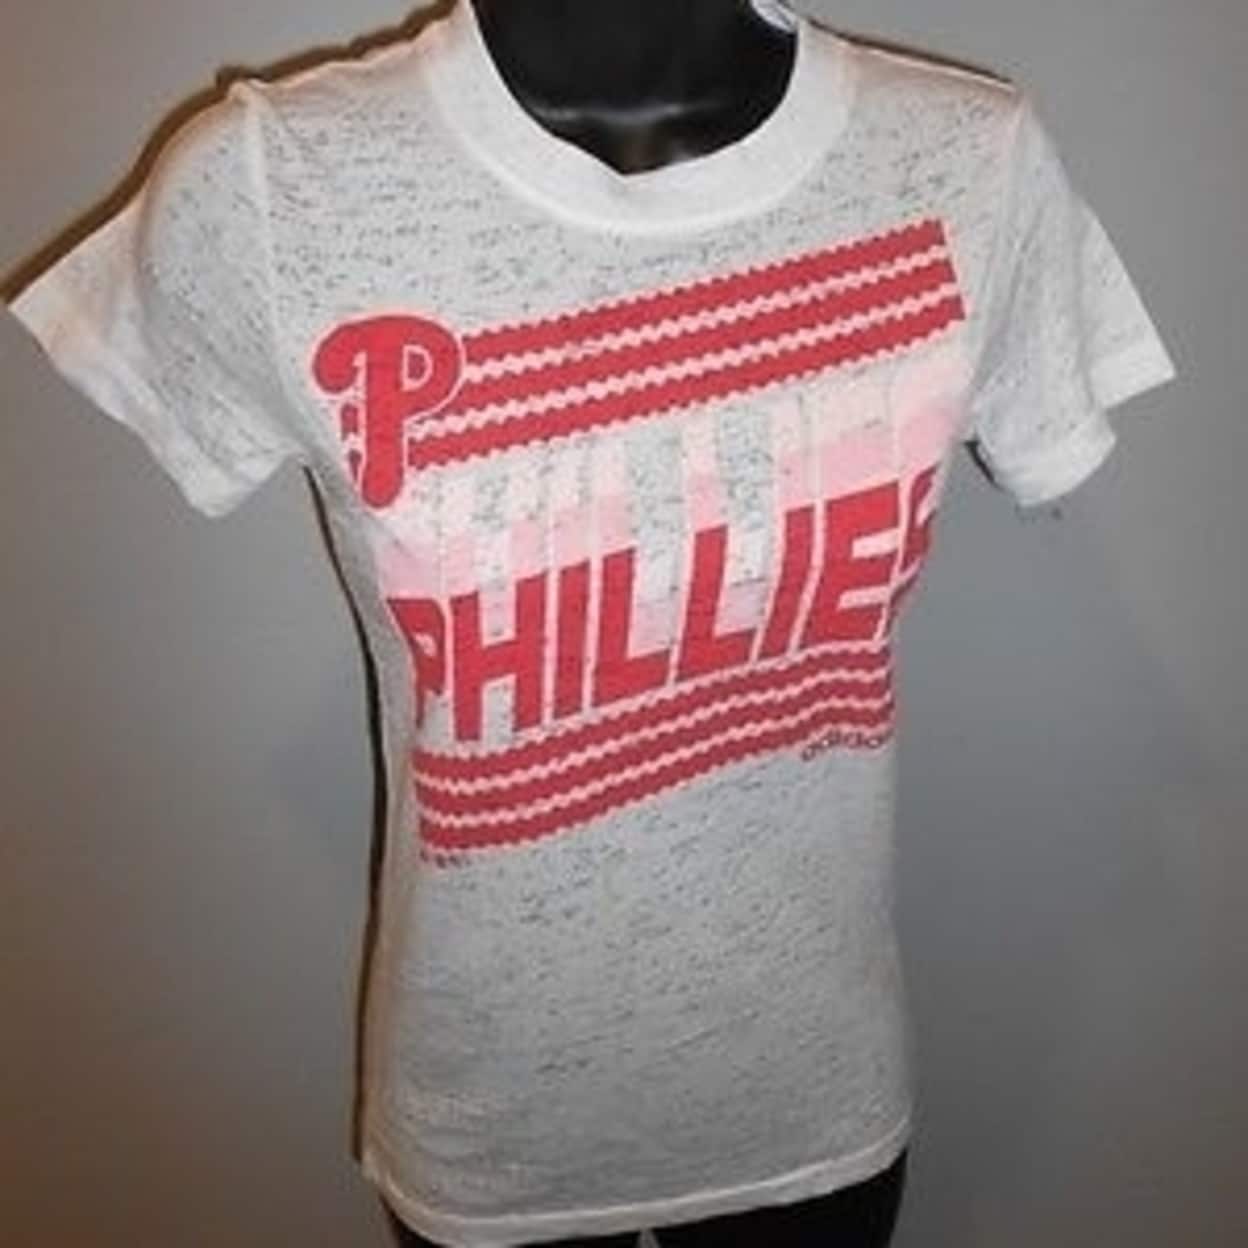 girls phillies shirt